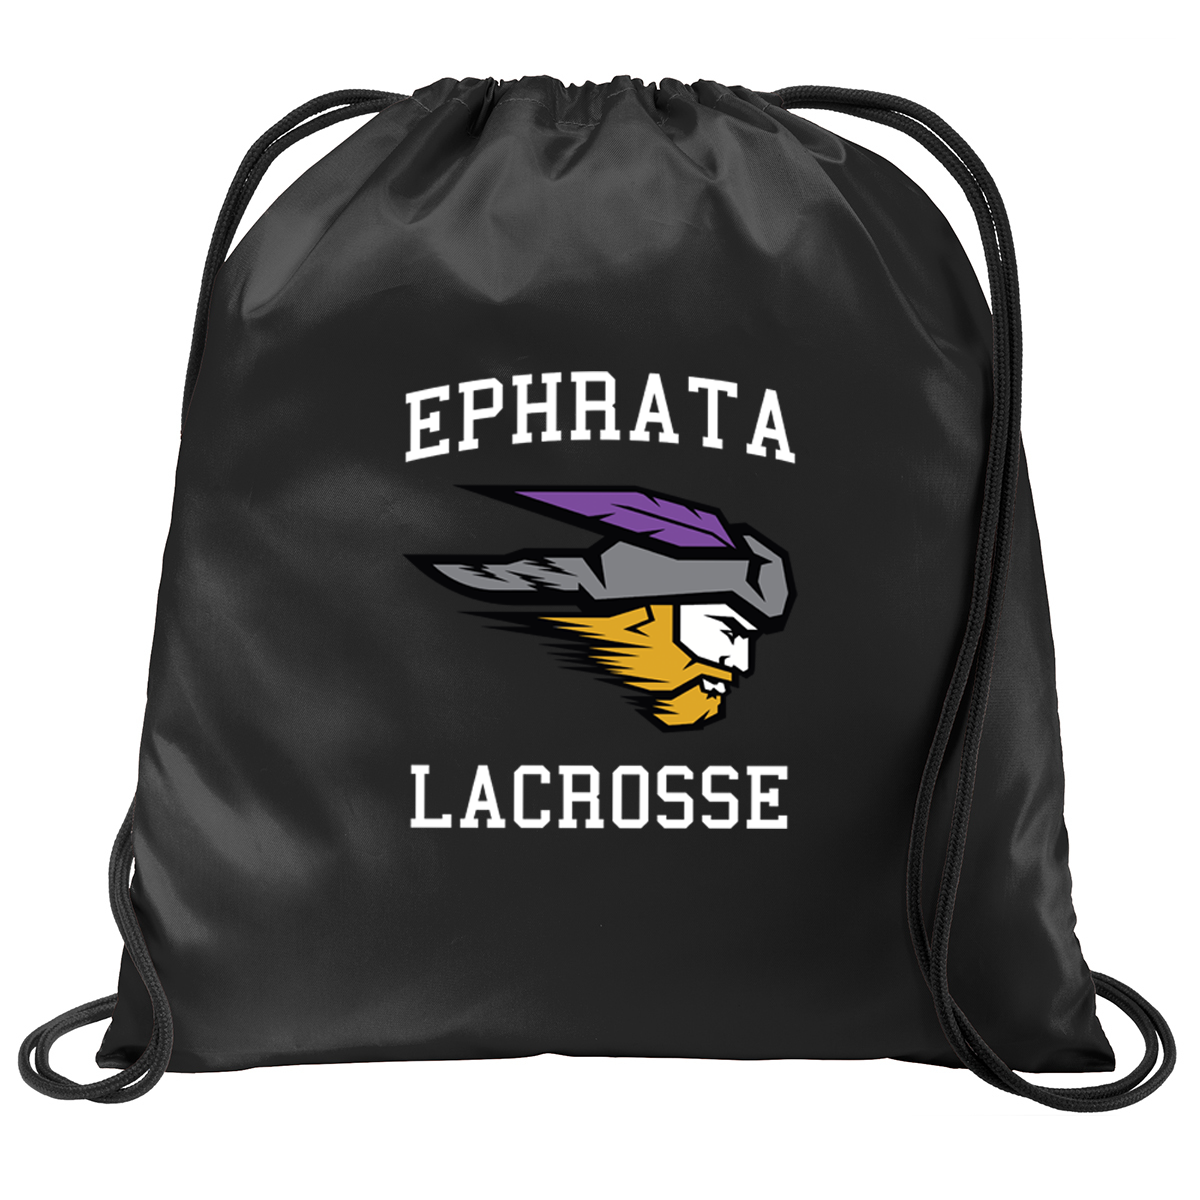 Ephrata Lacrosse Cinch Pack